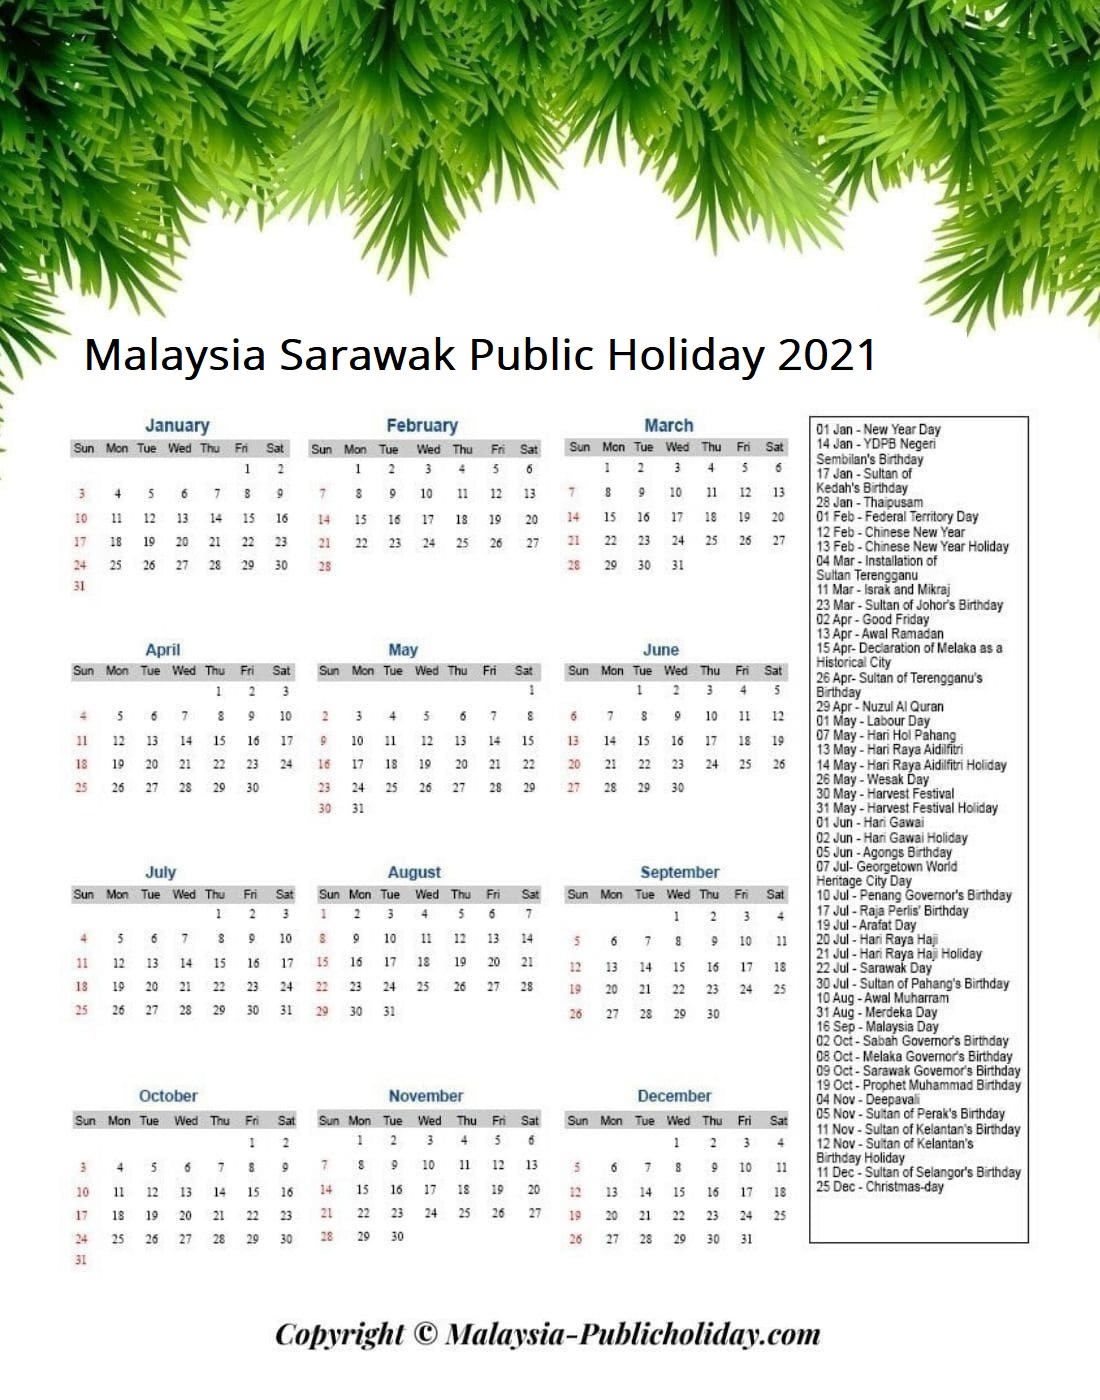 Sarawak public holiday 2021